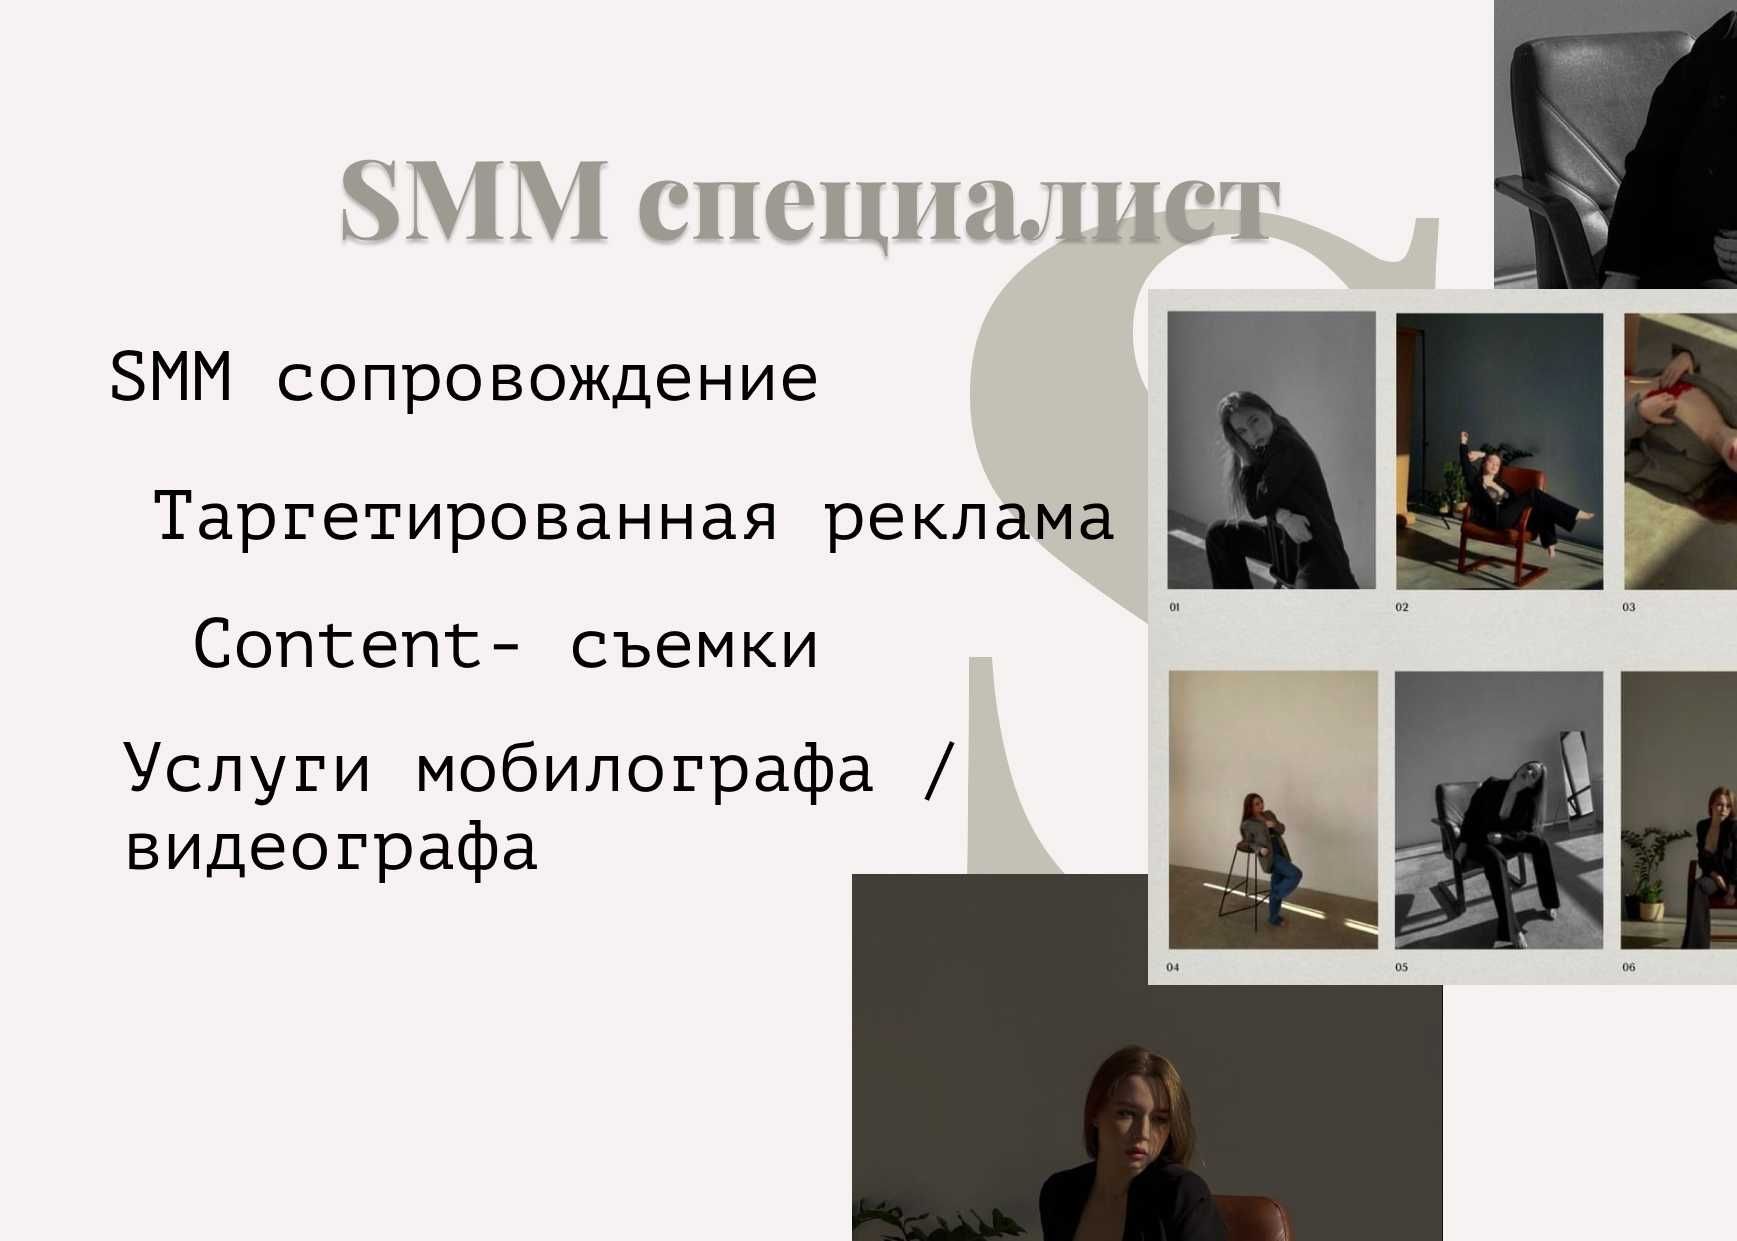 SMM специалист, СММ, съемка, мобилограф, таргет, продвижение Instagram